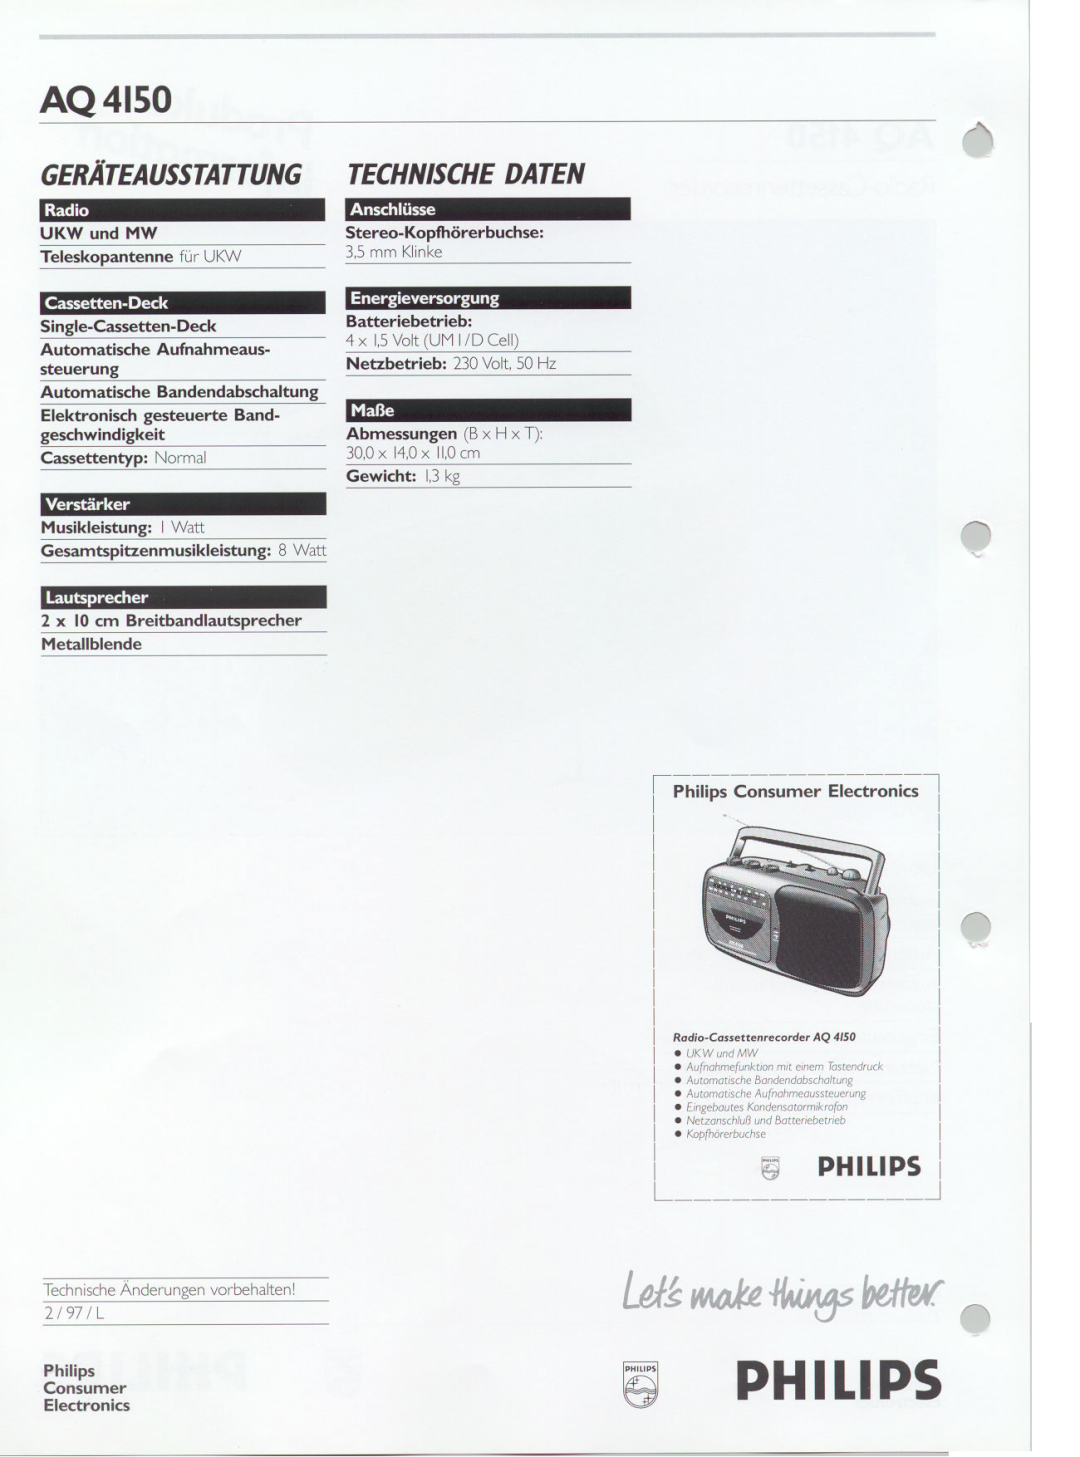 Philips AQ 4150 manual 